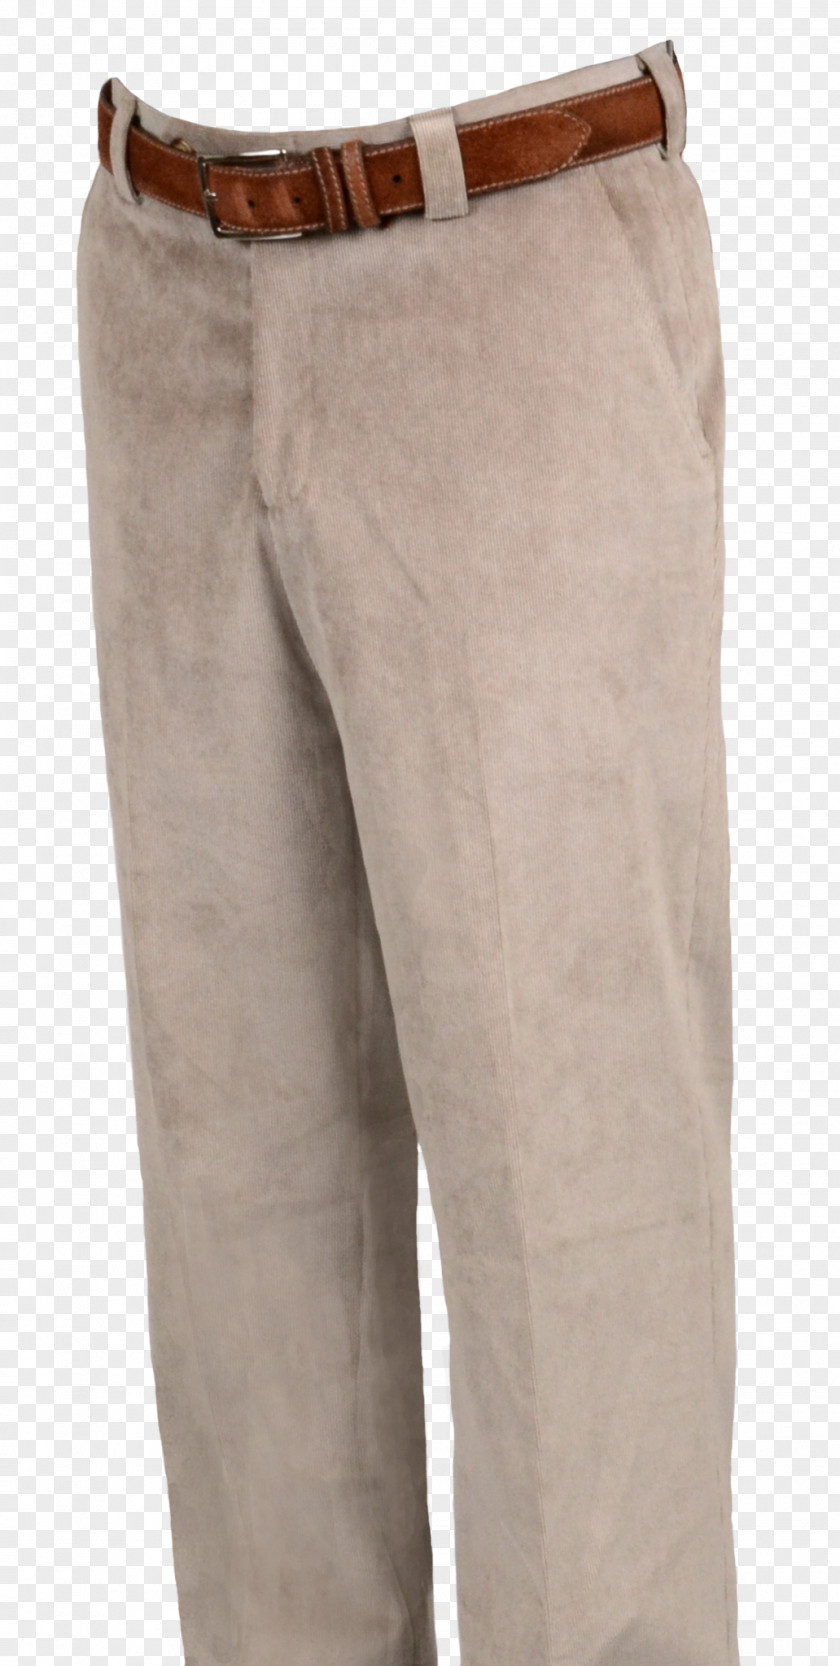 Men's Flat Material Khaki Waist Pants PNG